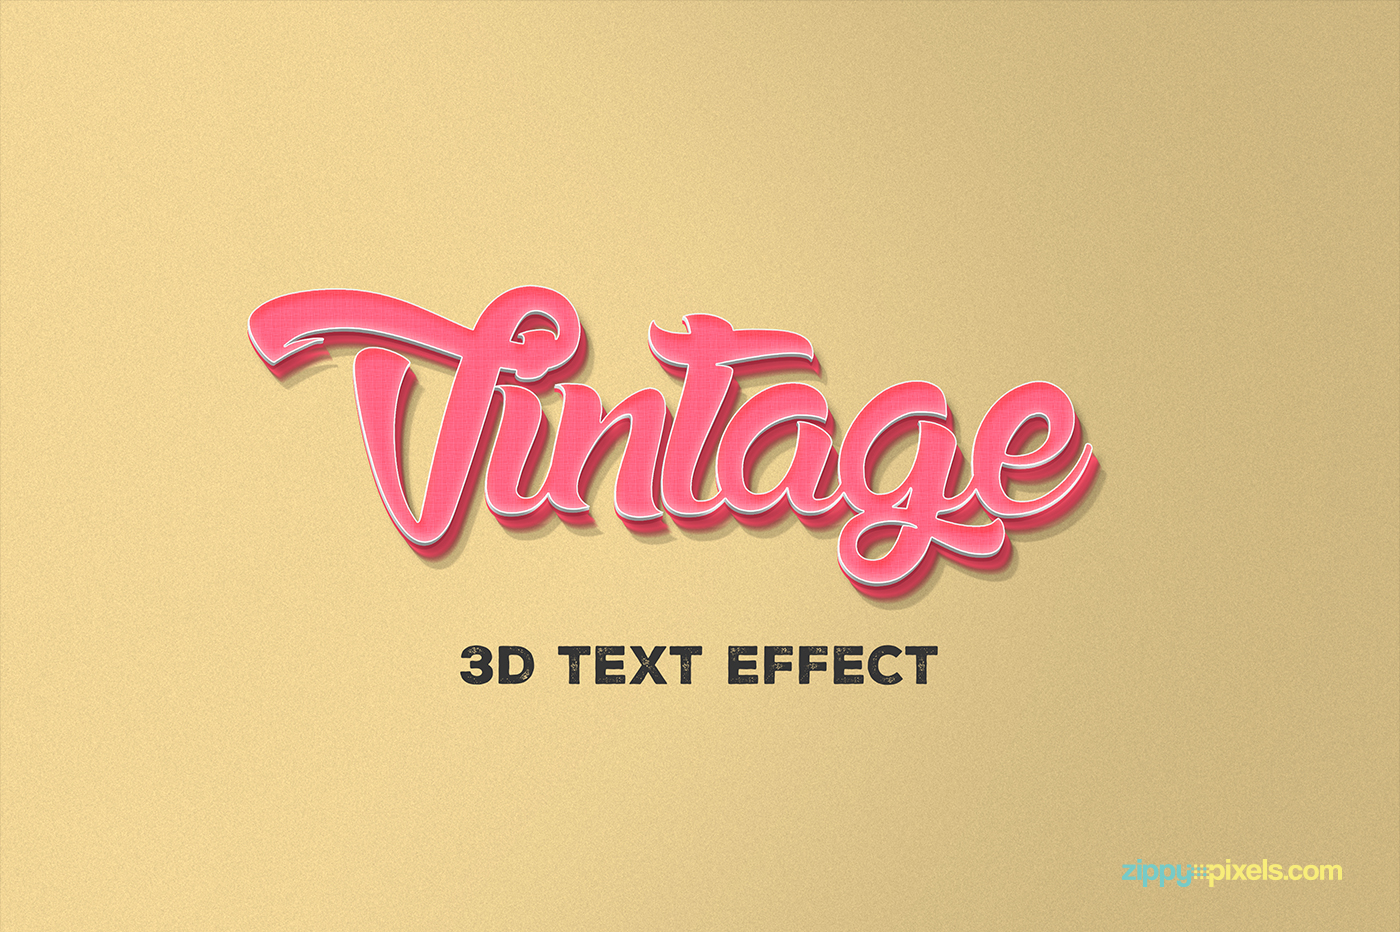 text effect 3d text effect Vintage Text Effect psd text effect Photoshop Text Effect free freebie vintage theme smart object vintage art minimalistic design